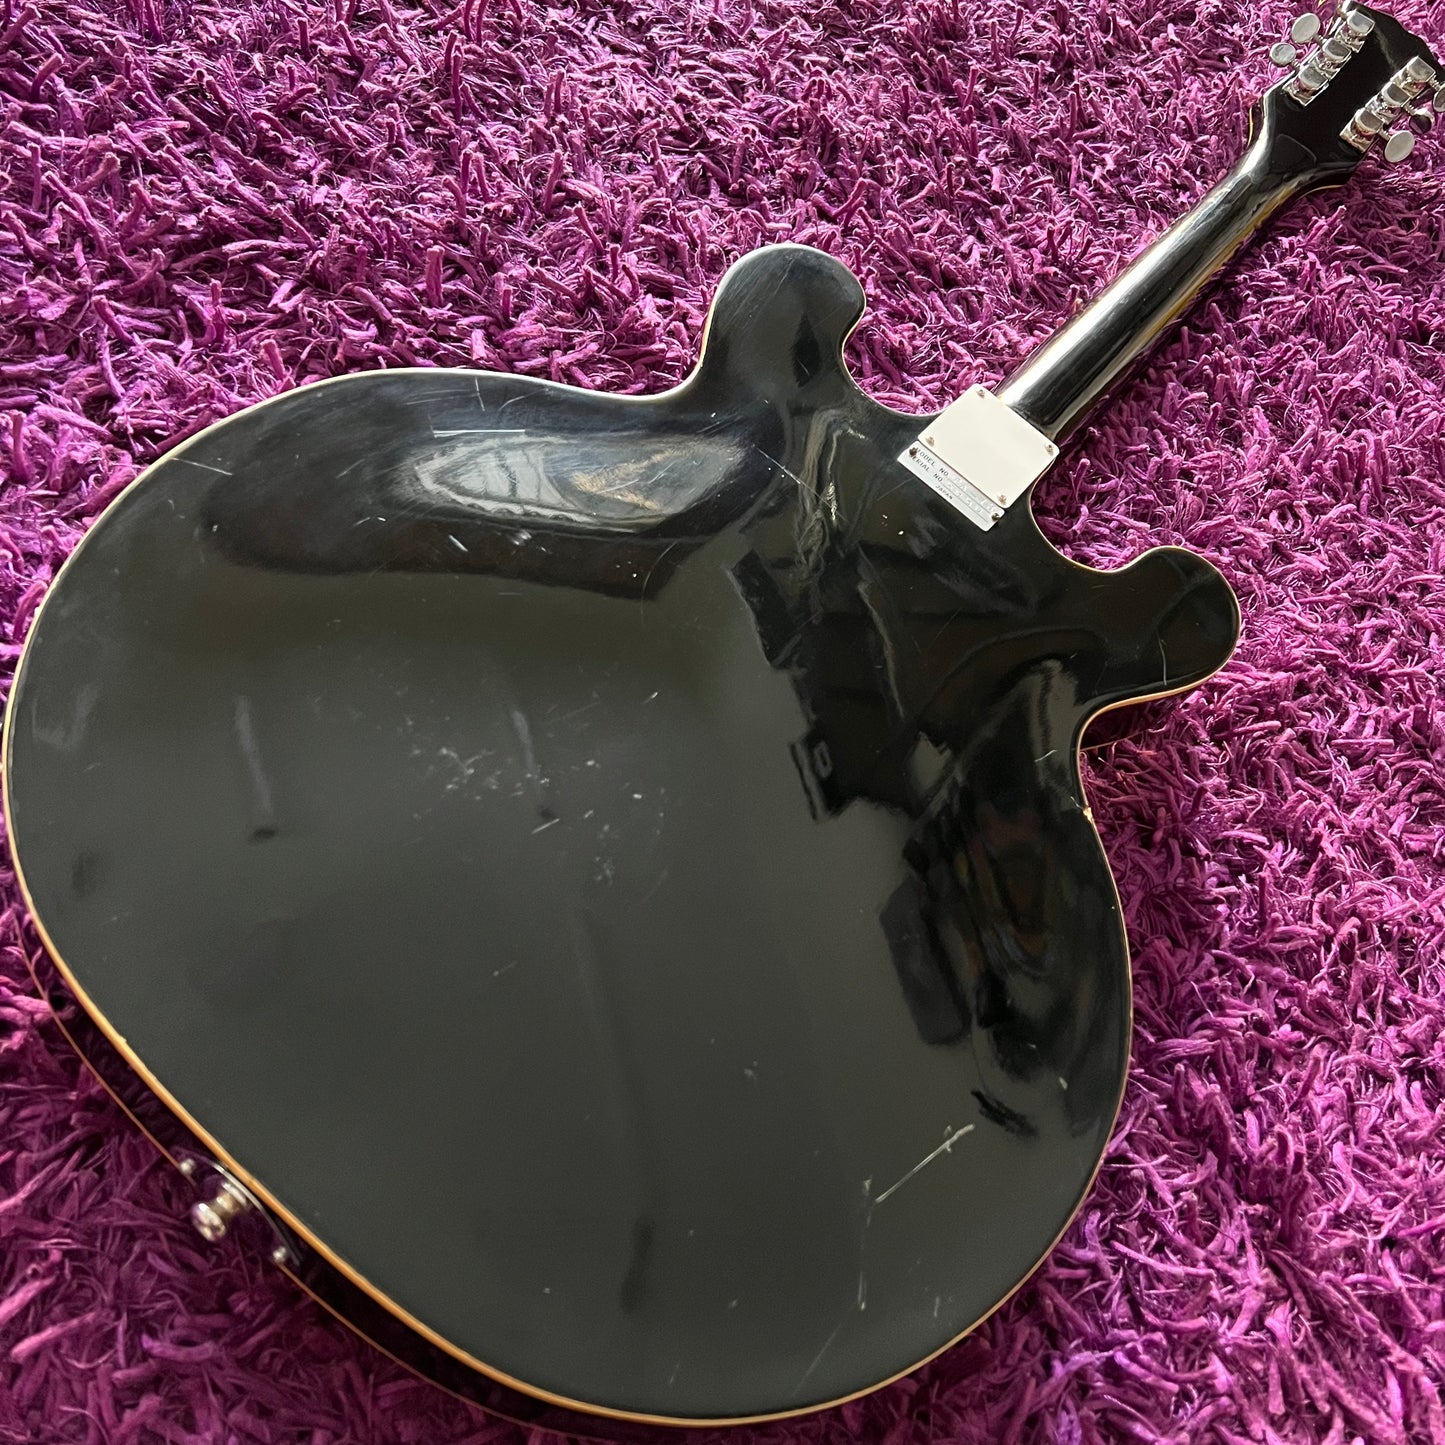 1960s Idol PA-13 Semi-Hollow Electric Guitar (MIJ)